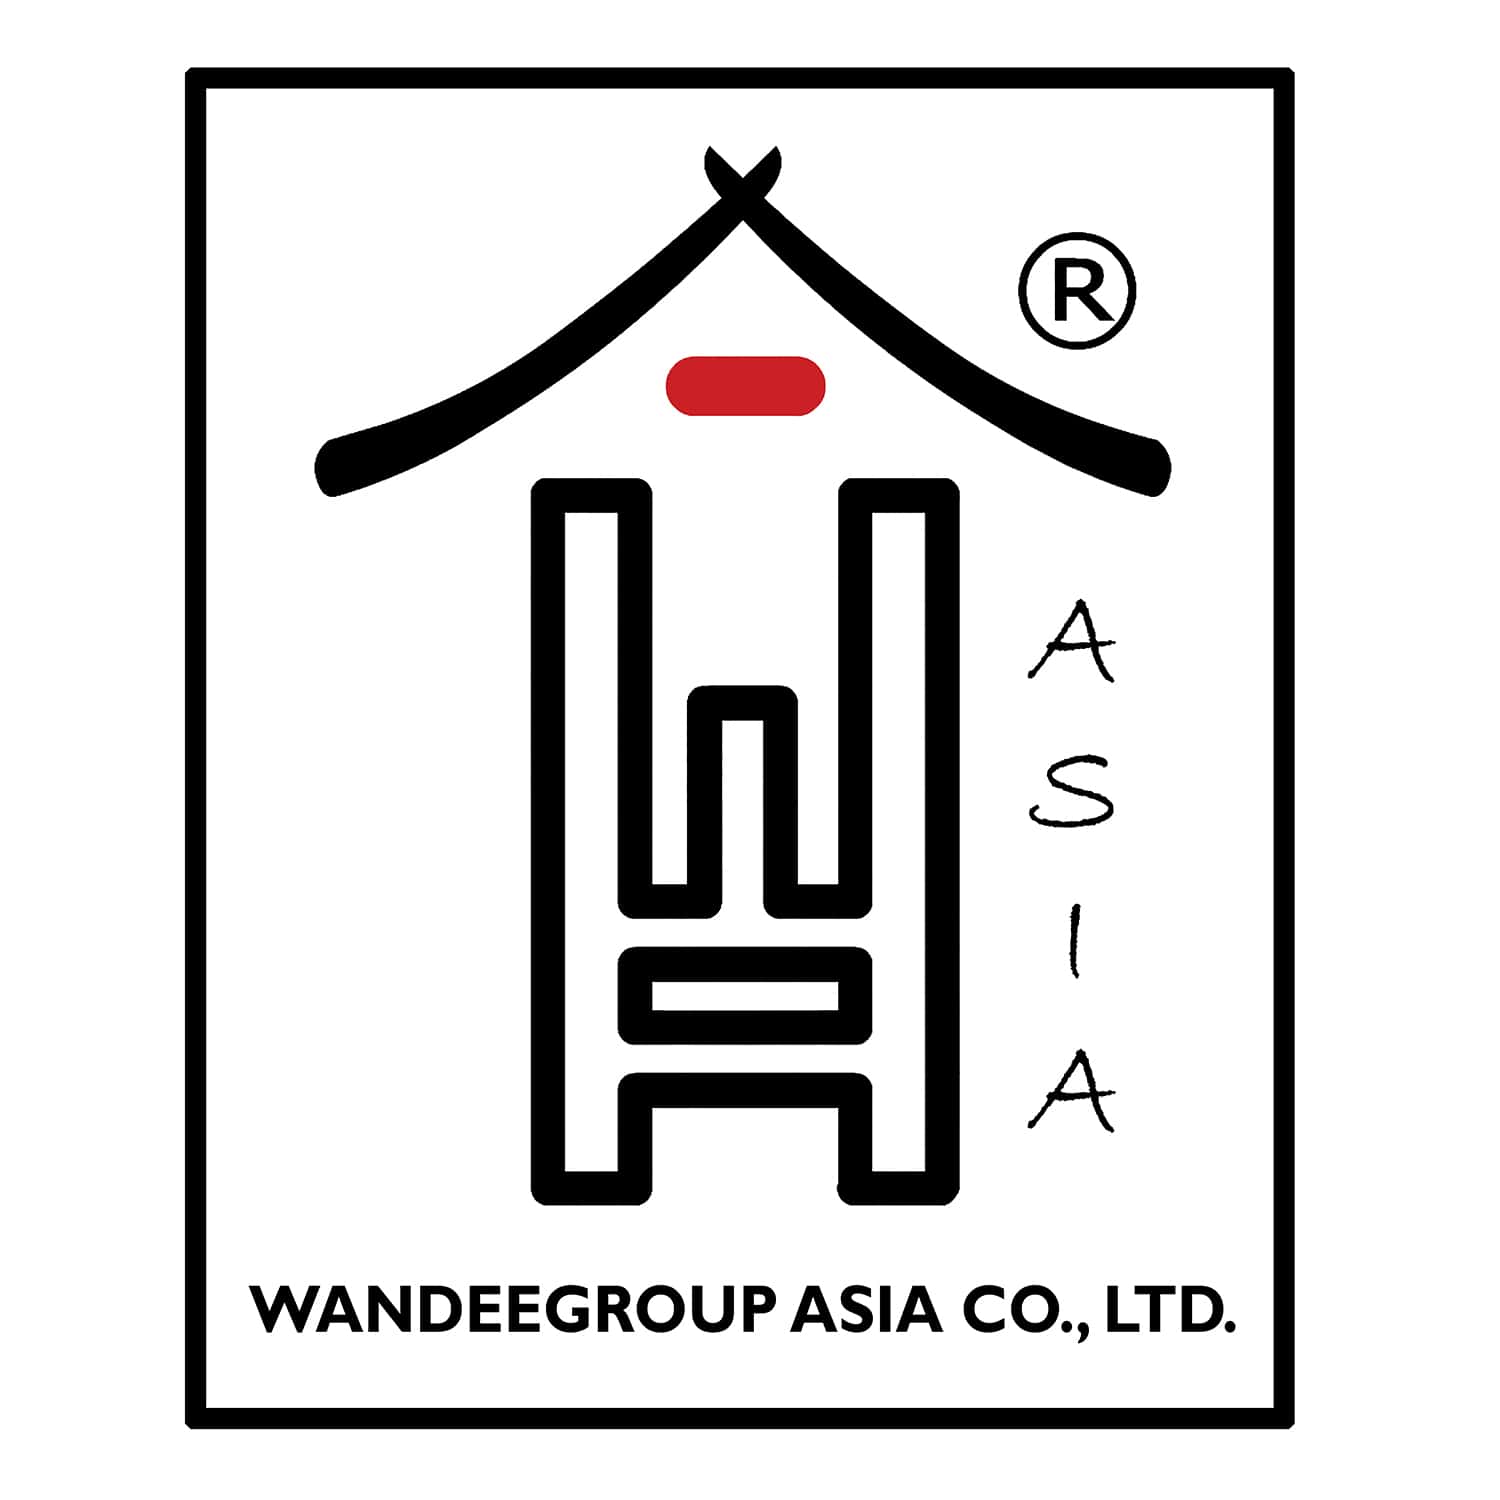 Wandeegroup Asia logotype